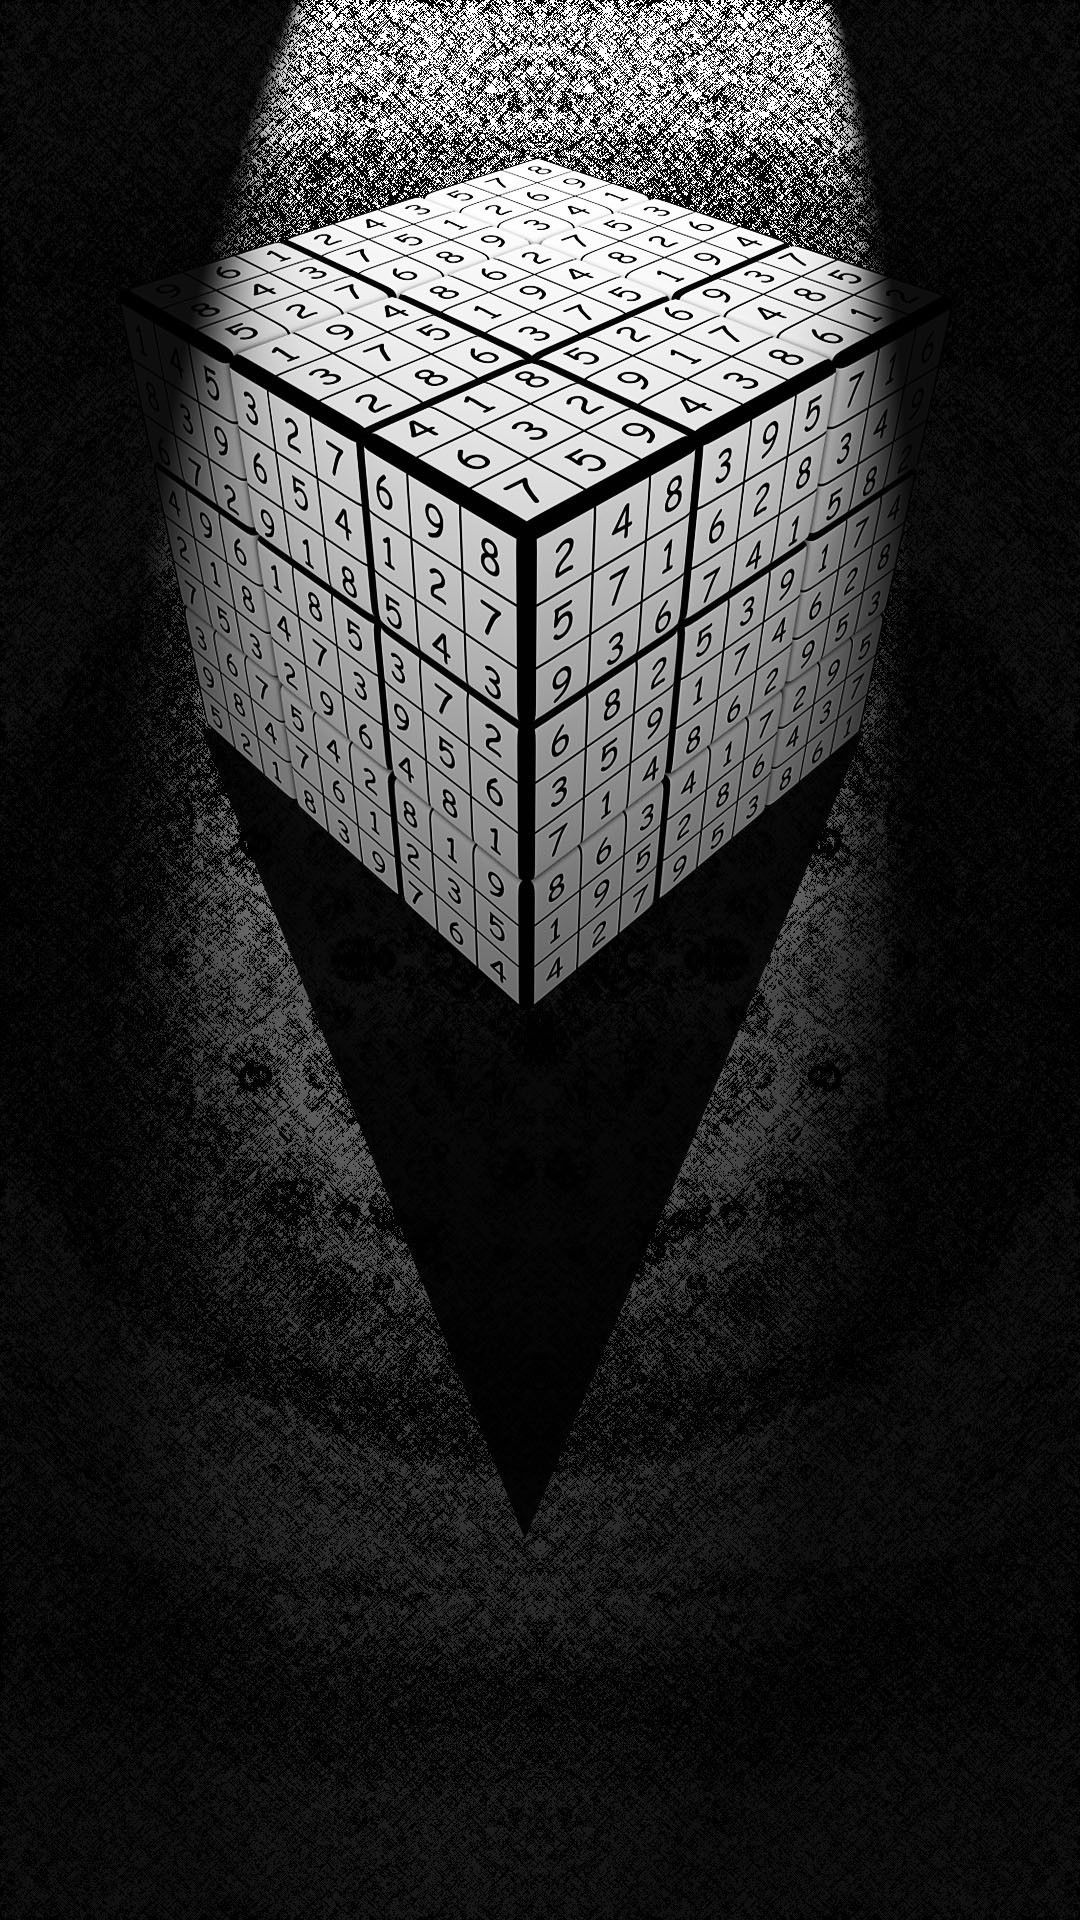 Wallpaper rubik cube sudoku. Sudoku, Rubiks cube, Wallpaper